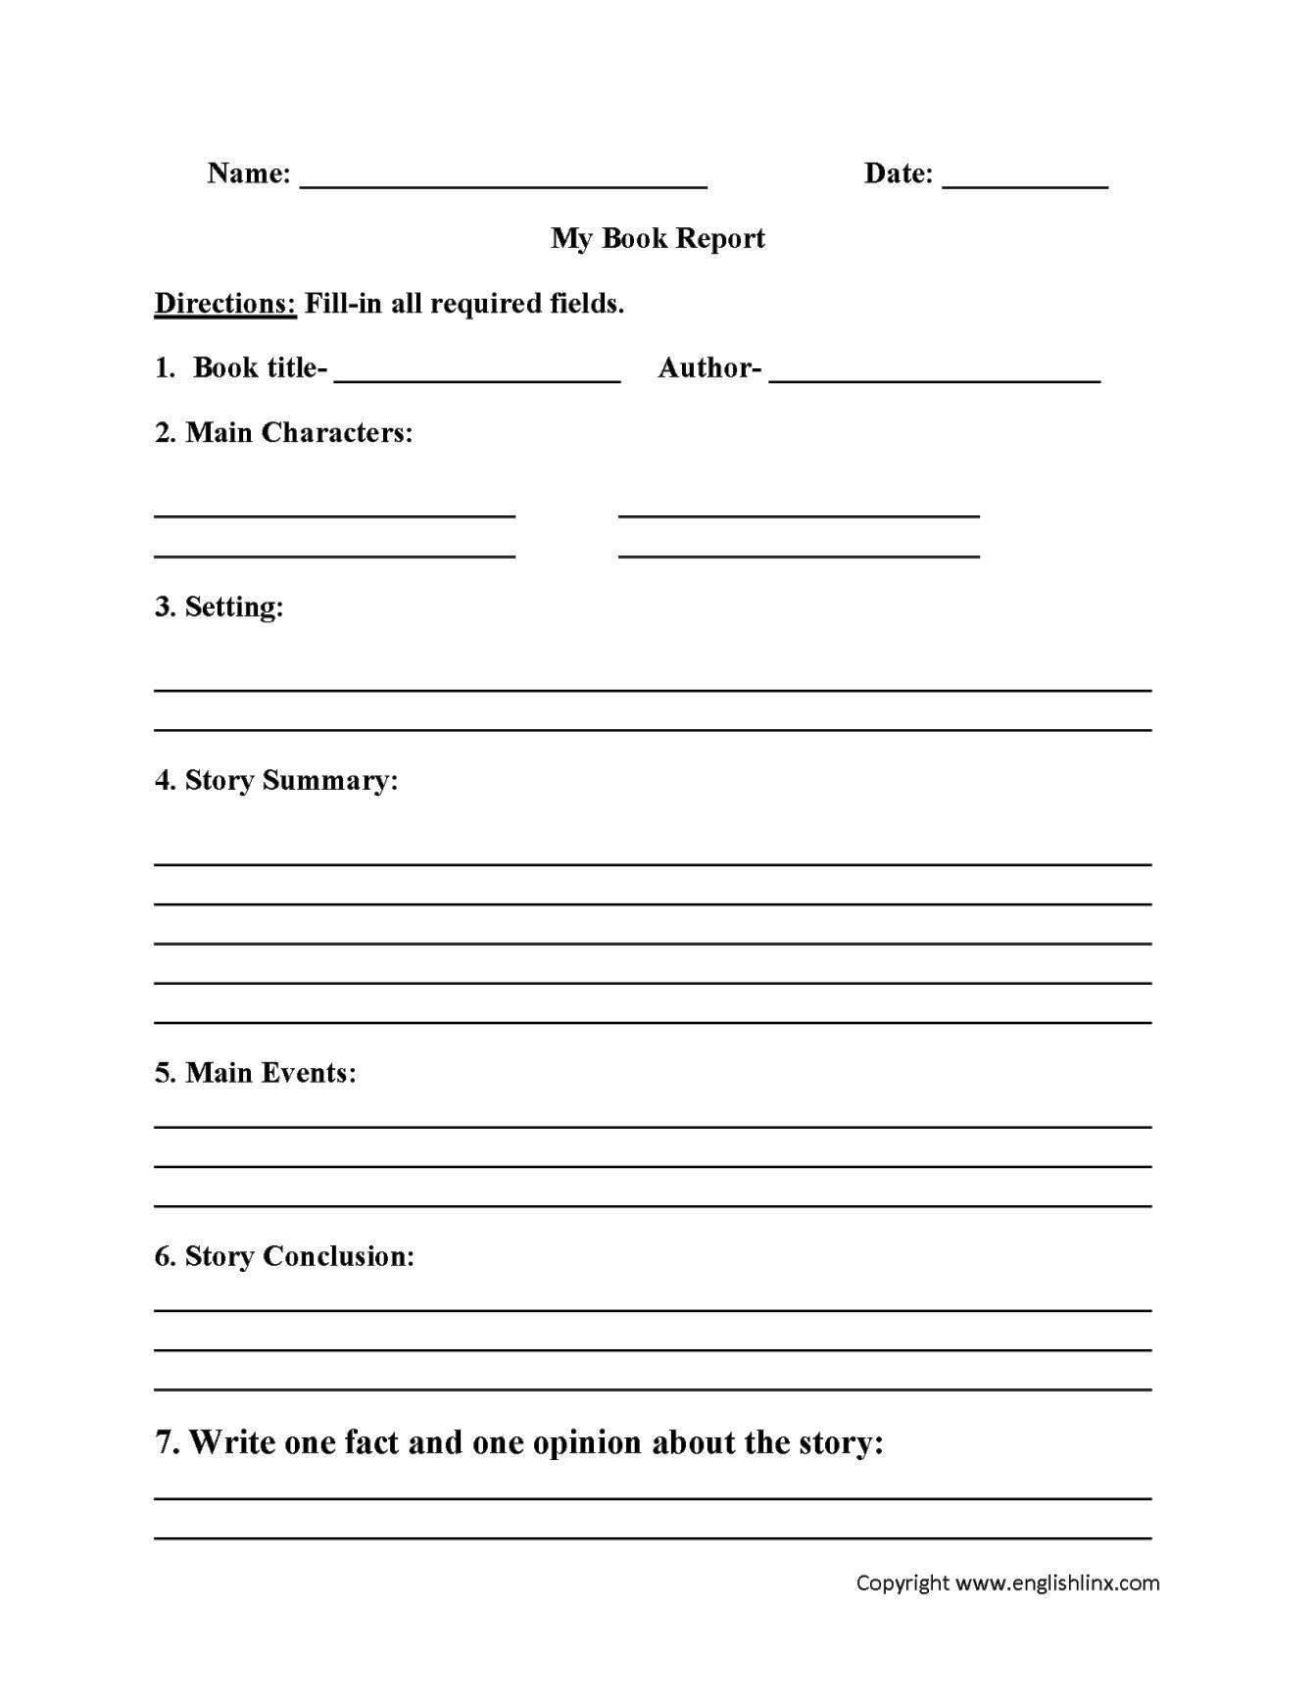 book review grade 5 template